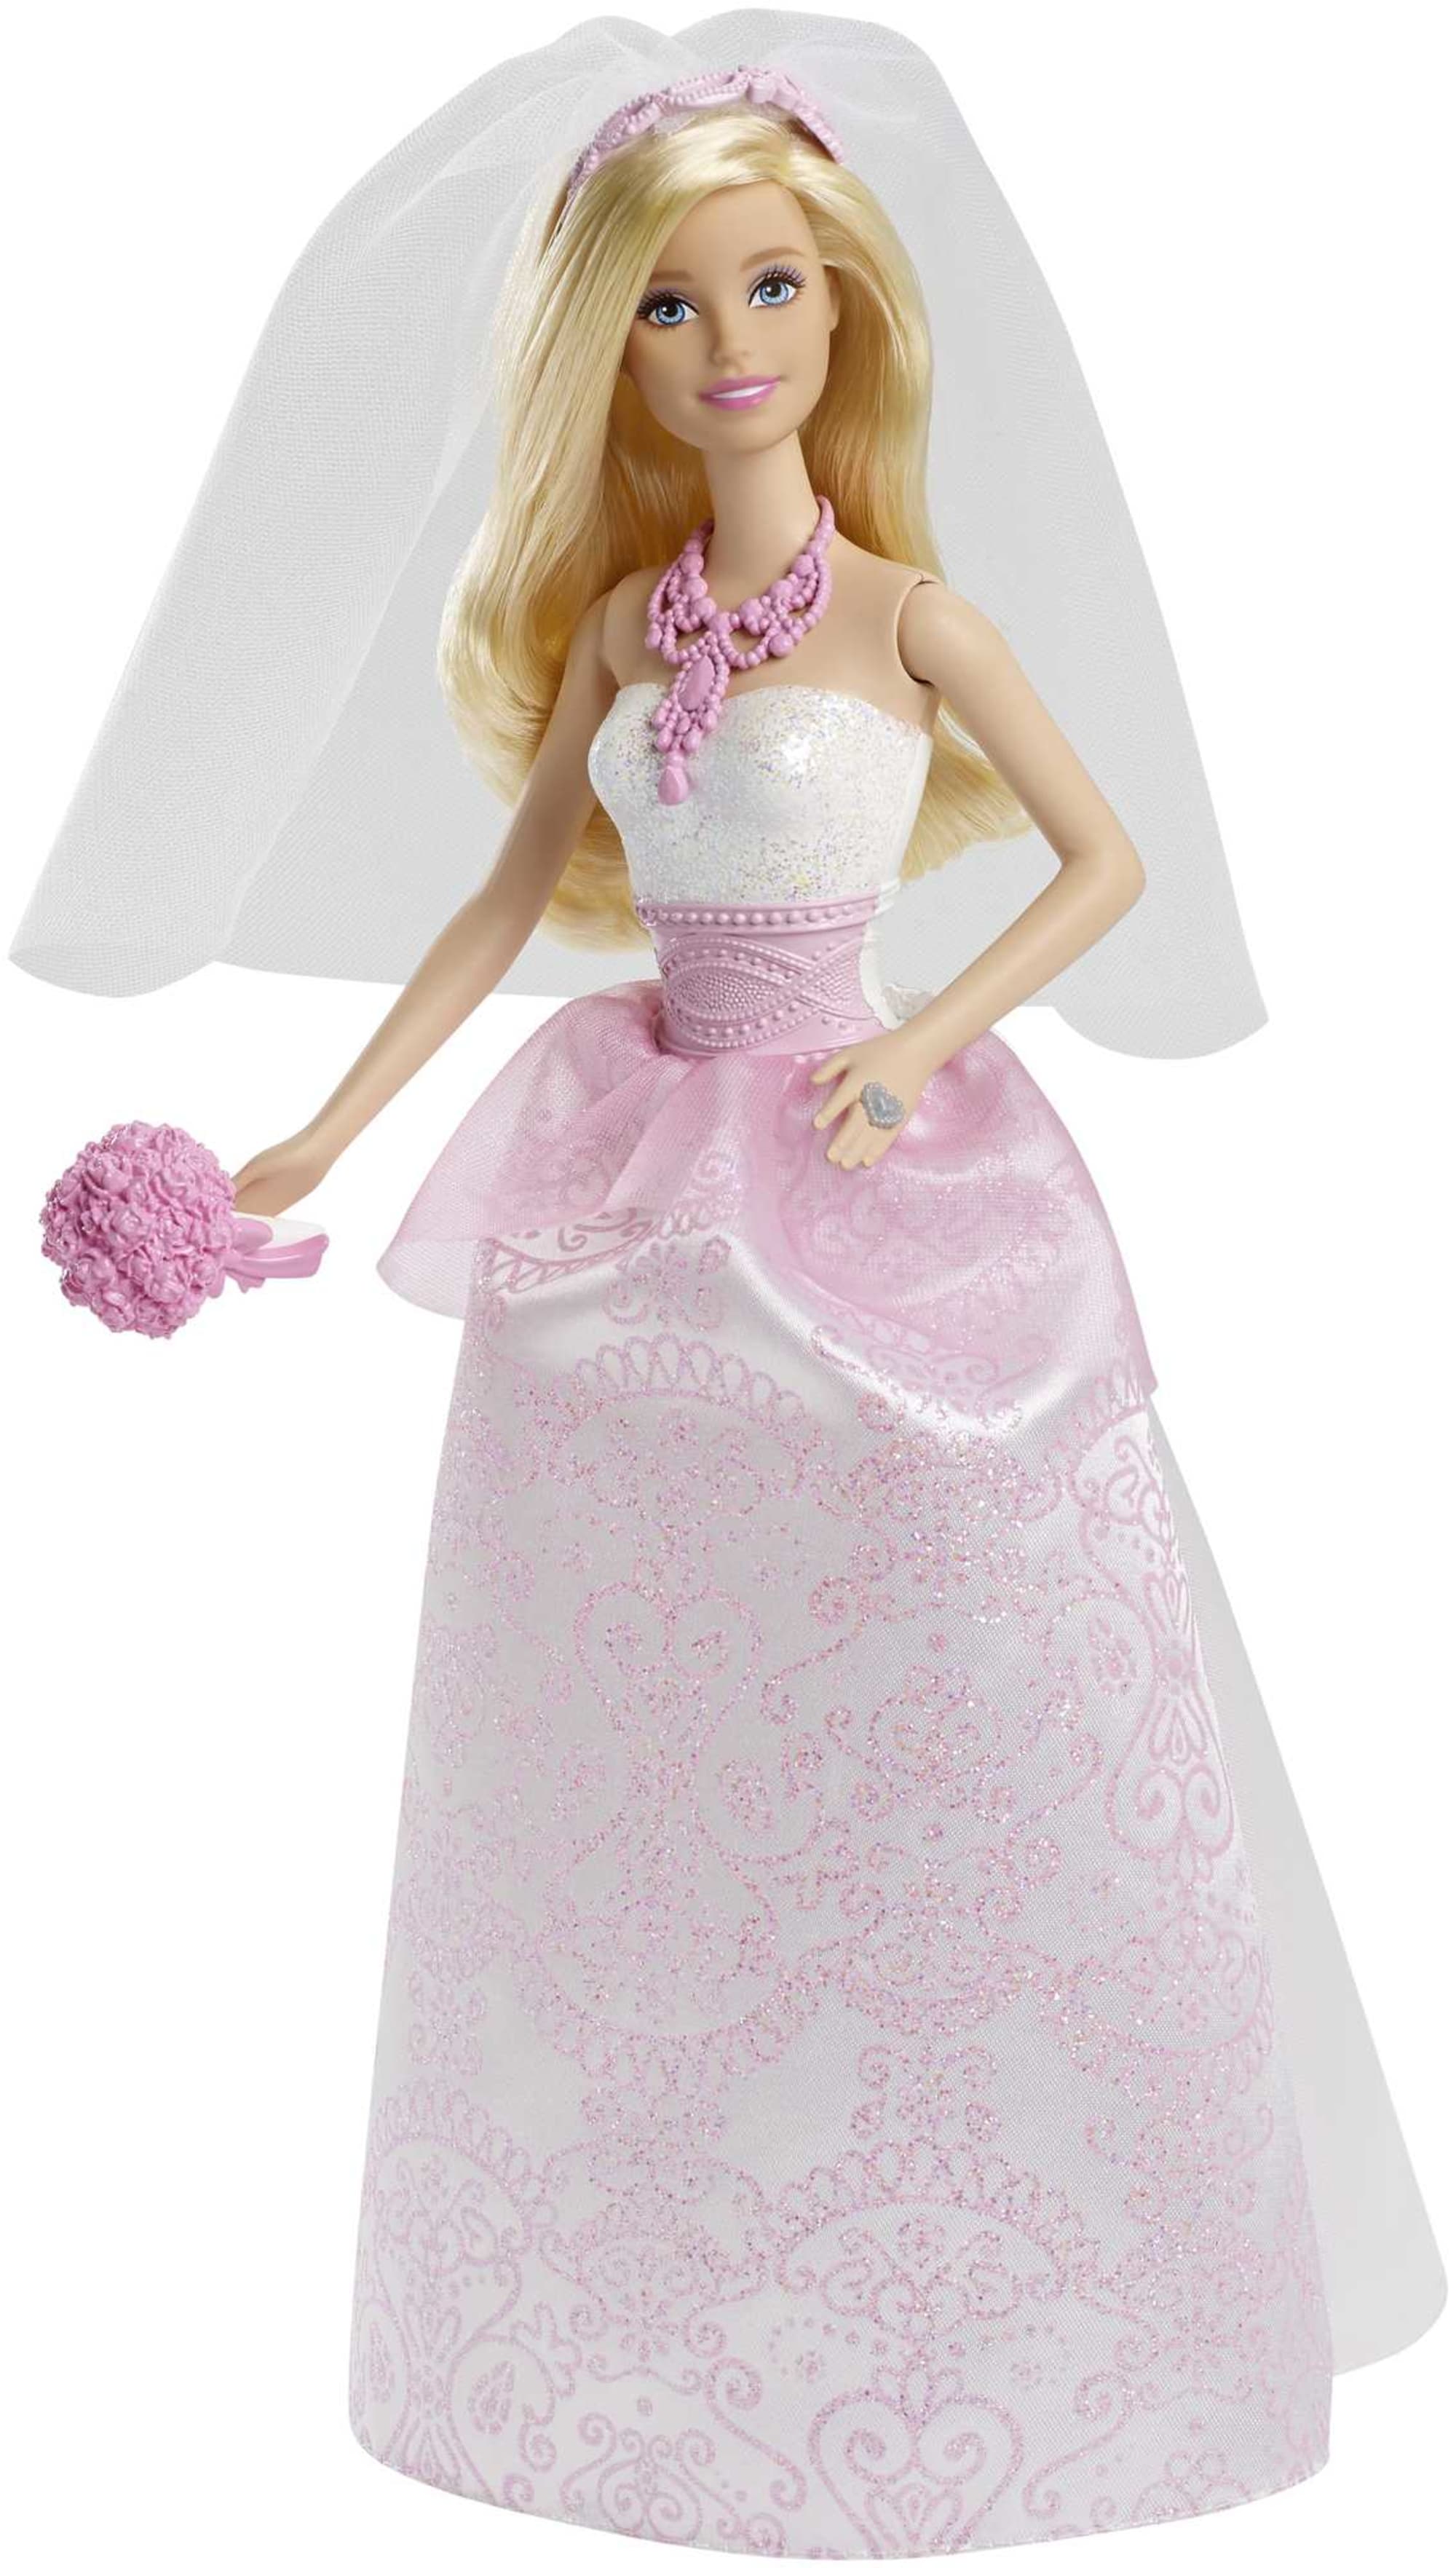 Barbie in a wedding dress